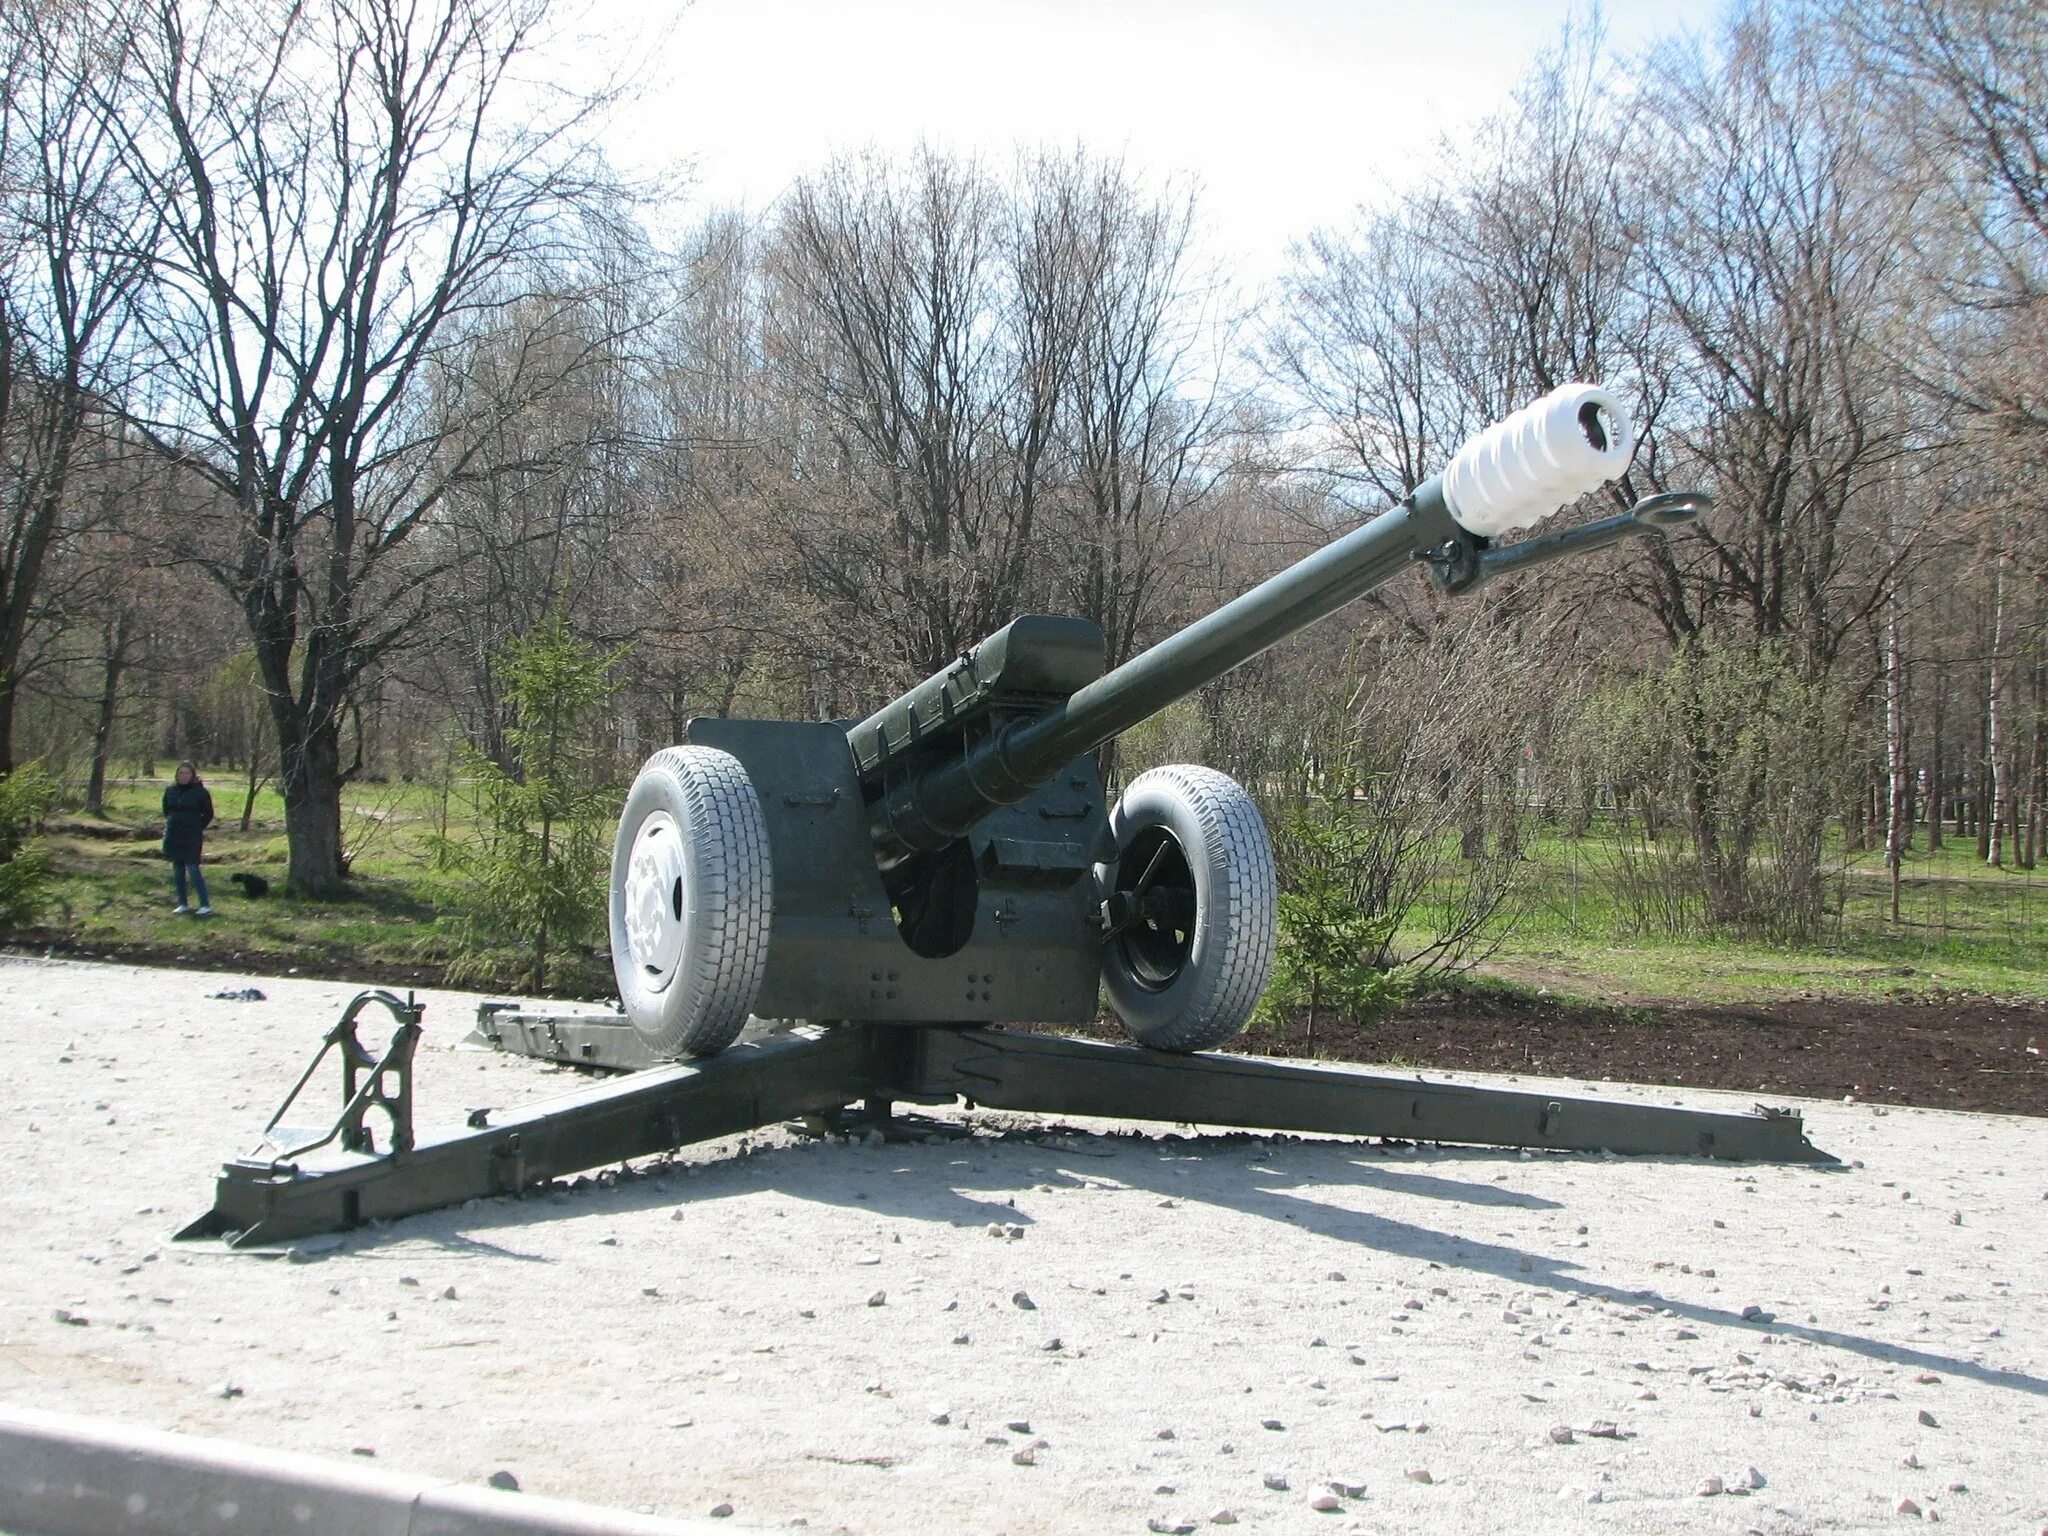 Калибр 122 мм. Калибр гаубицы д30. 122-Мм гаубица д-30. 152-Мм пушка-гаубица д-30. Д - 30 Калибр 122 мм.